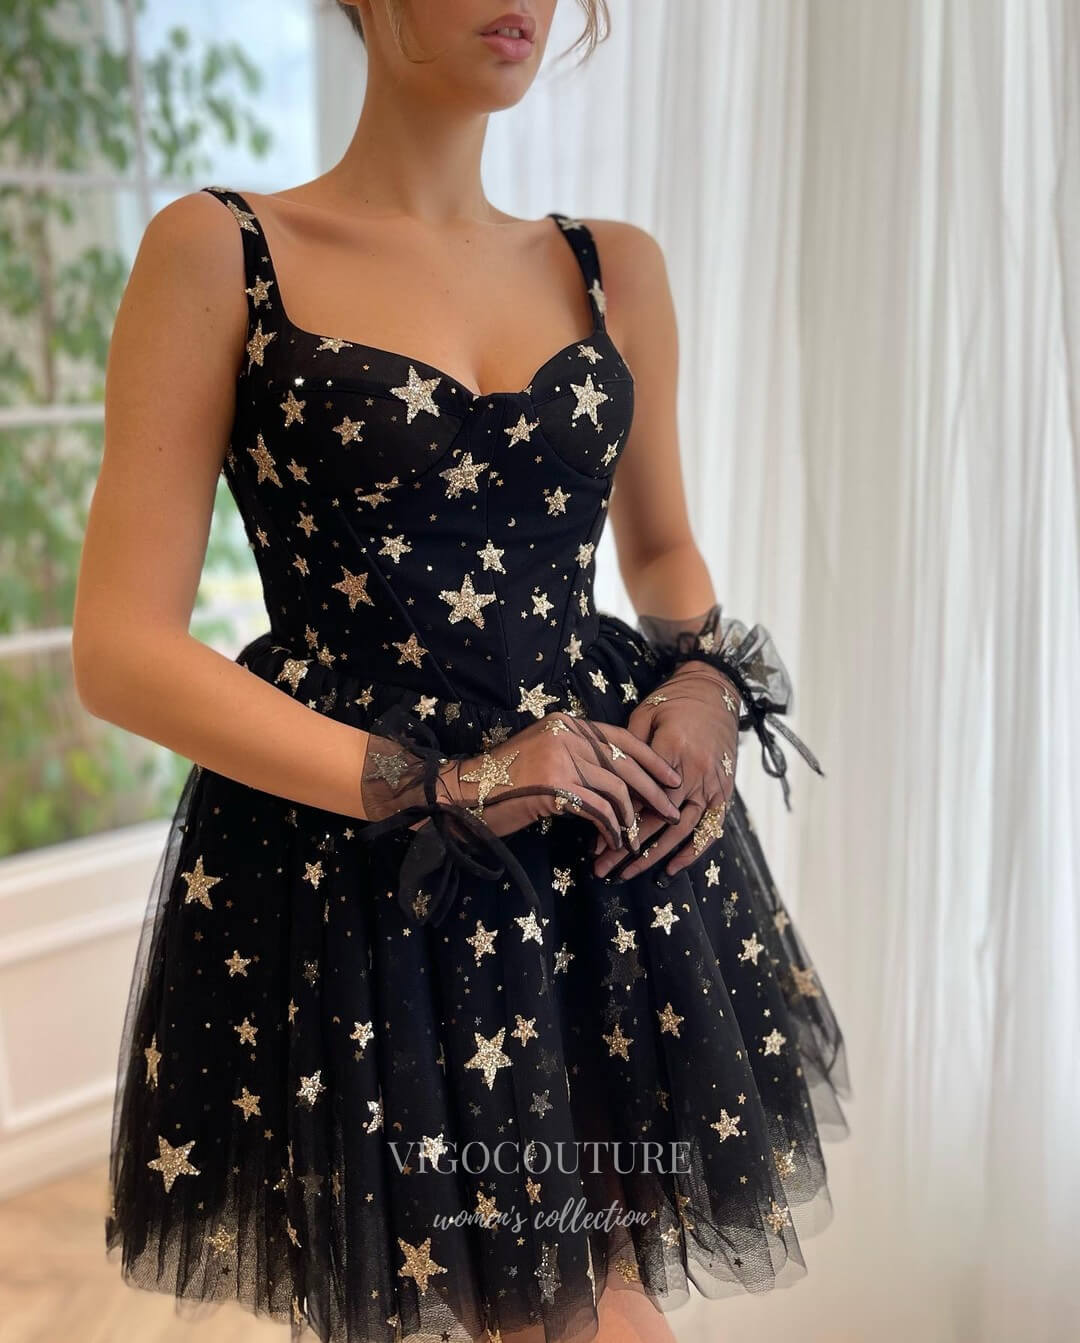 Black Starry Tulle Homecoming Dress Spaghetti Strap Graduation Dress hc285-Prom Dresses-vigocouture-Black-US0-vigocouture